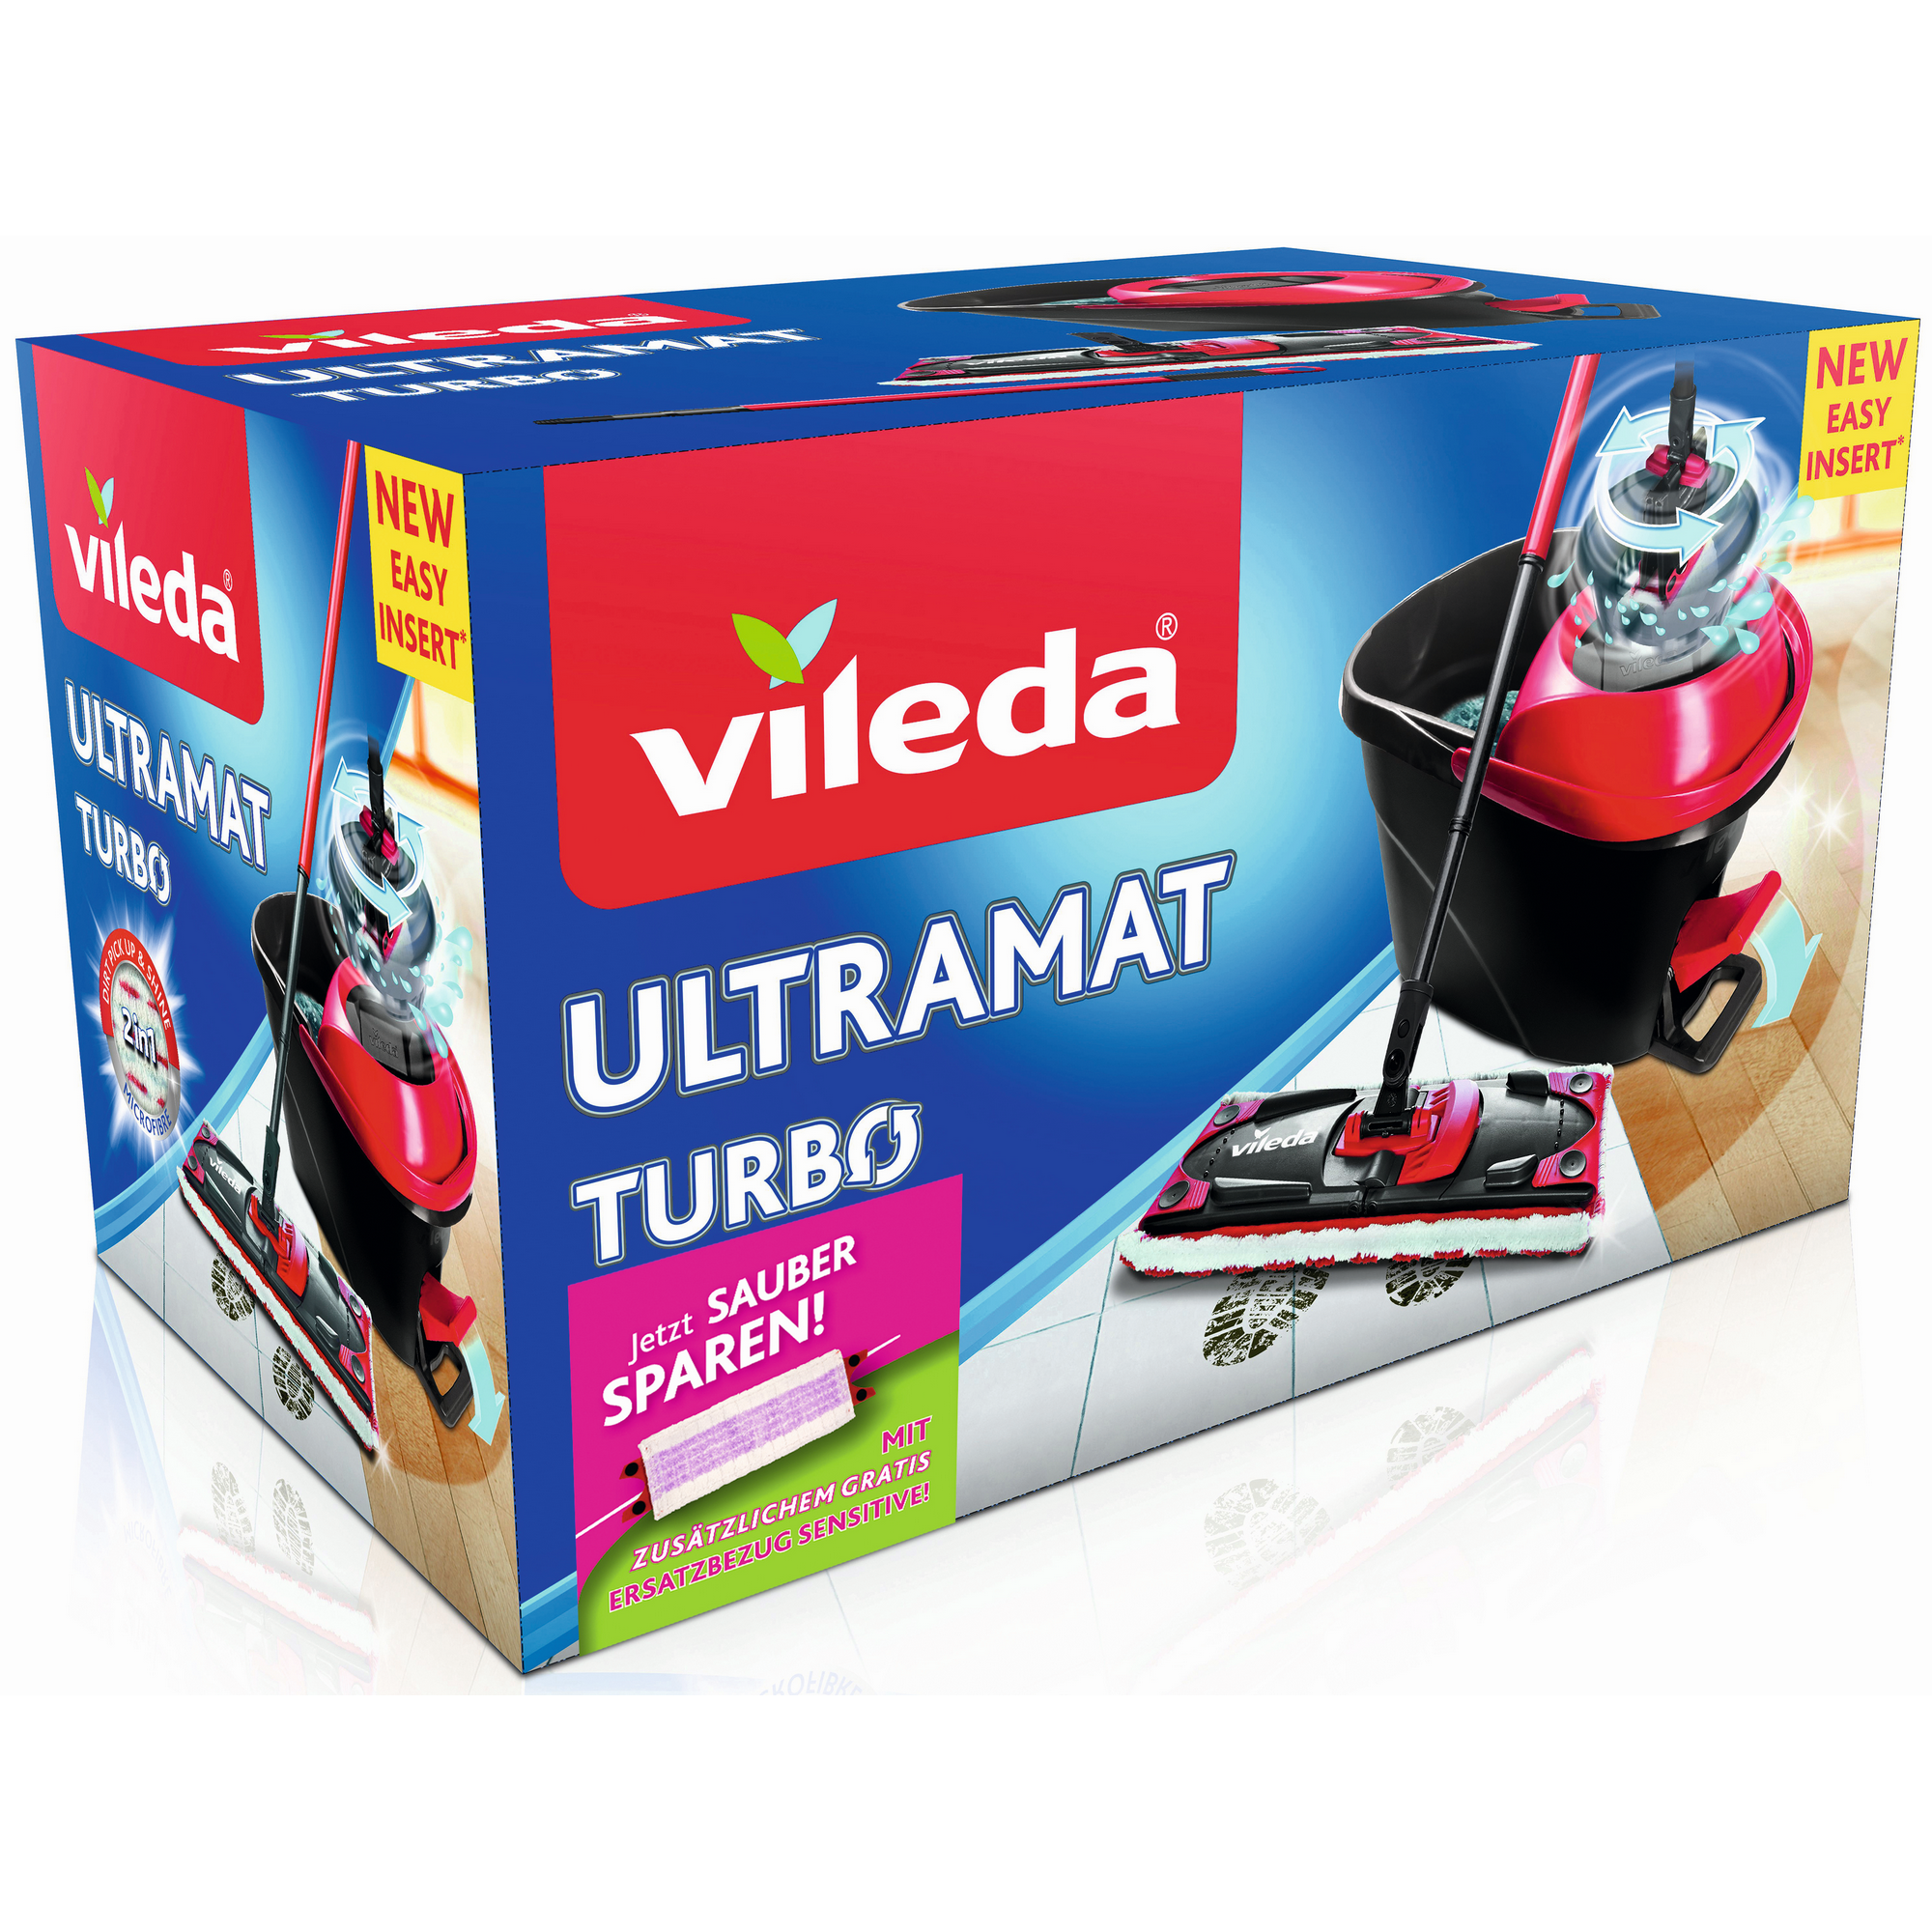 Bodenwischer-Set 'UltraMat Turbo' mit Ersatzbezug Sensitive + product picture